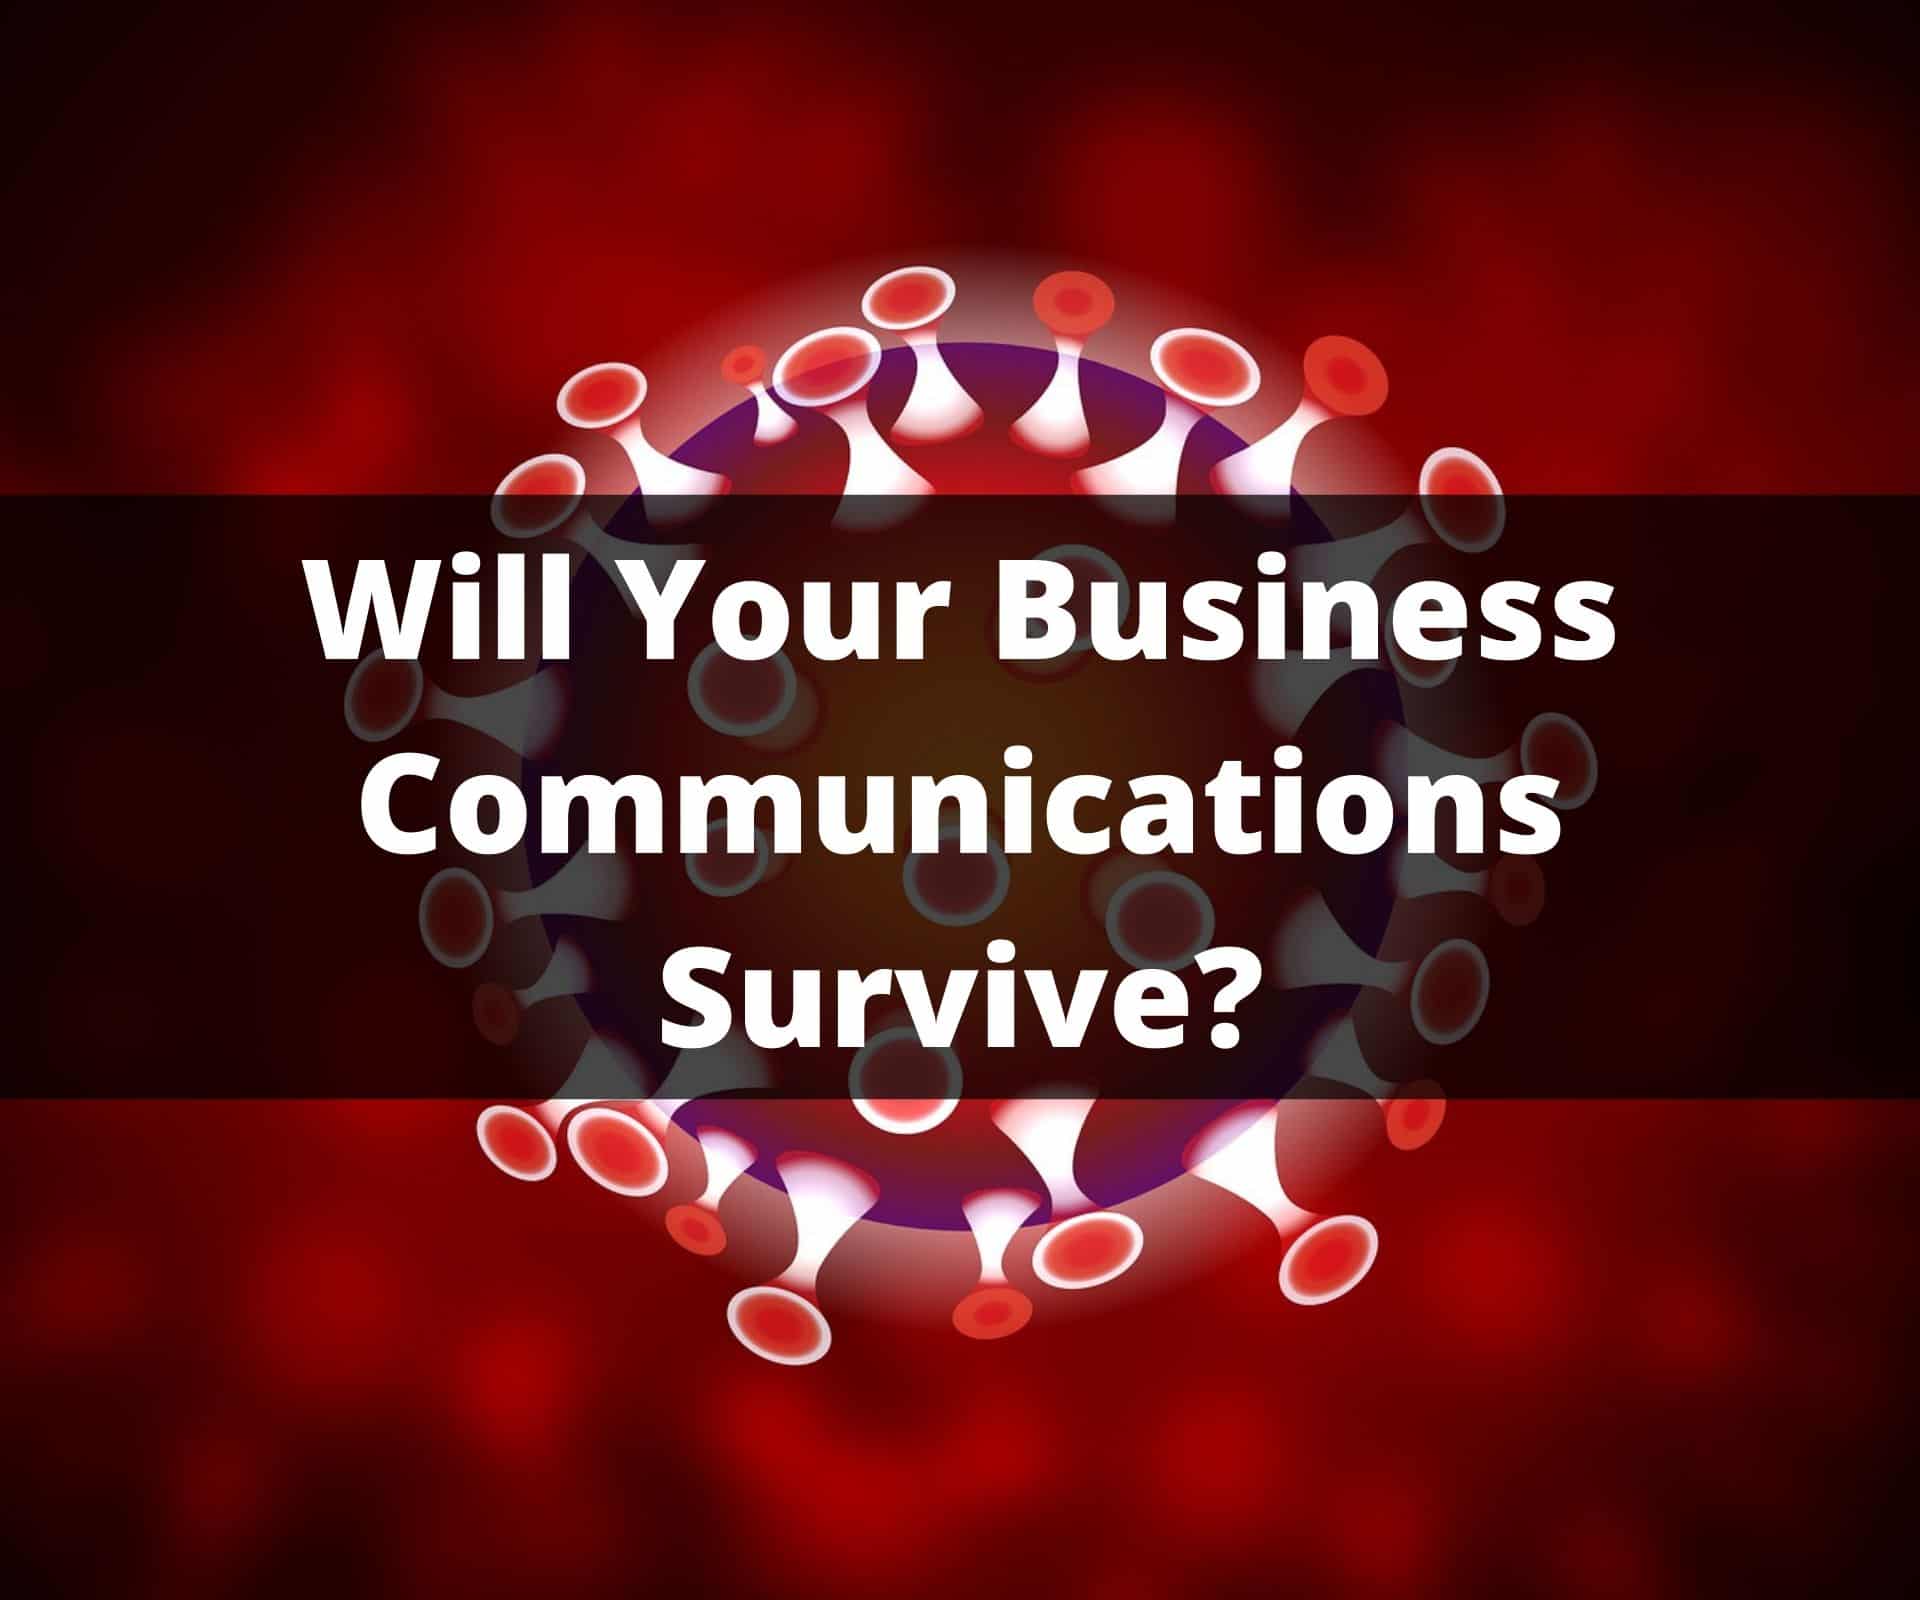 Will Your Business Communications Survive Coronavirus?